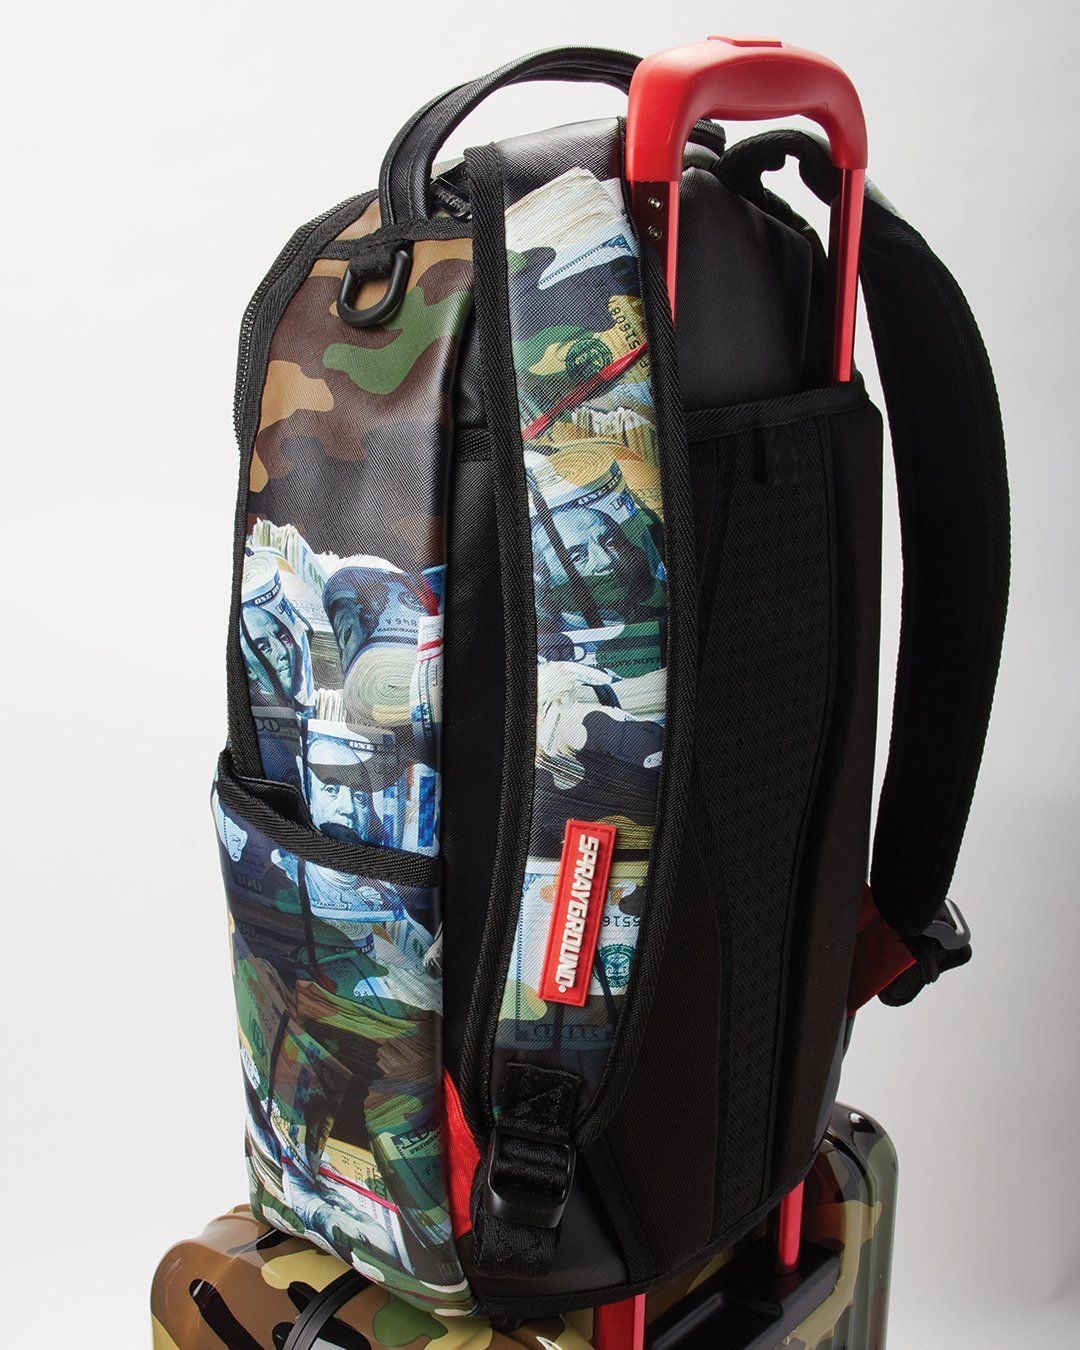 Sale Sprayground Full-Size Black Carry-On Camo Luggage Bundle Discount - -10